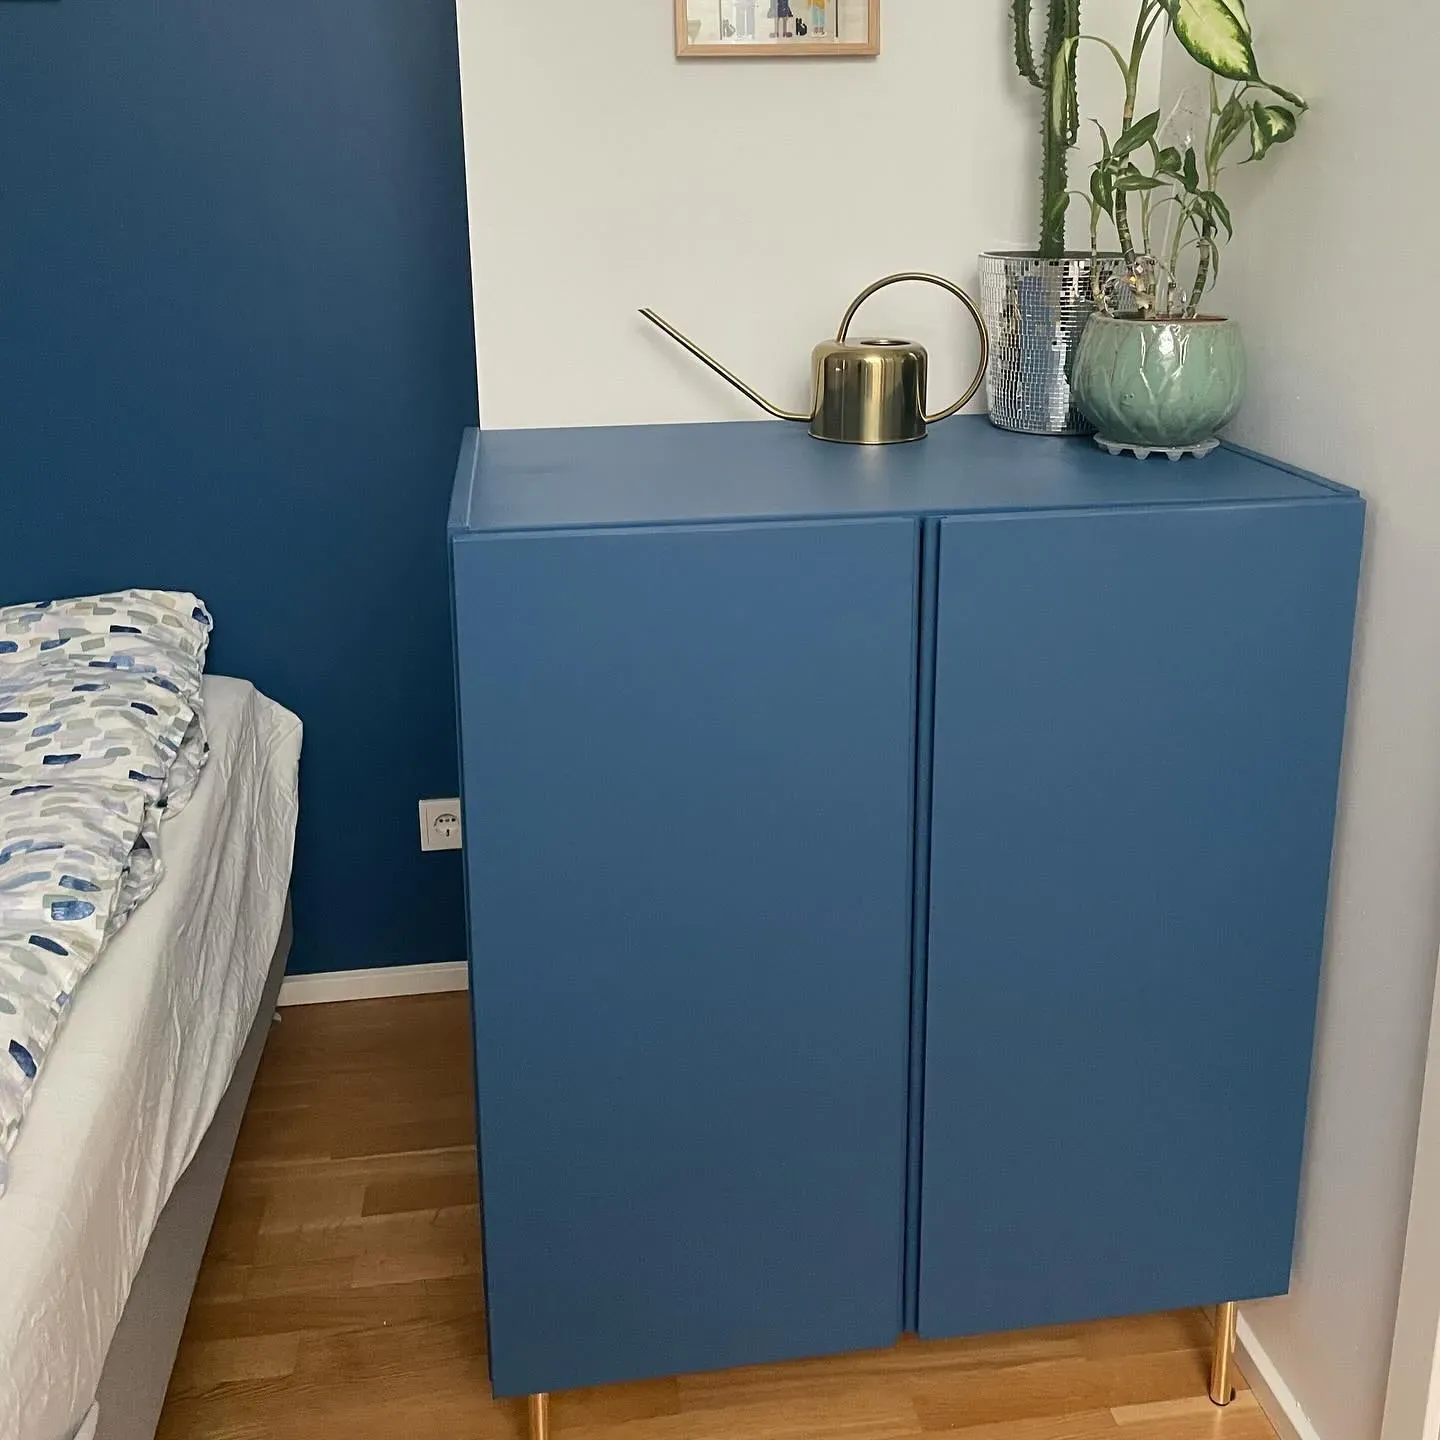 Jotun Statement Blue bedroom color review